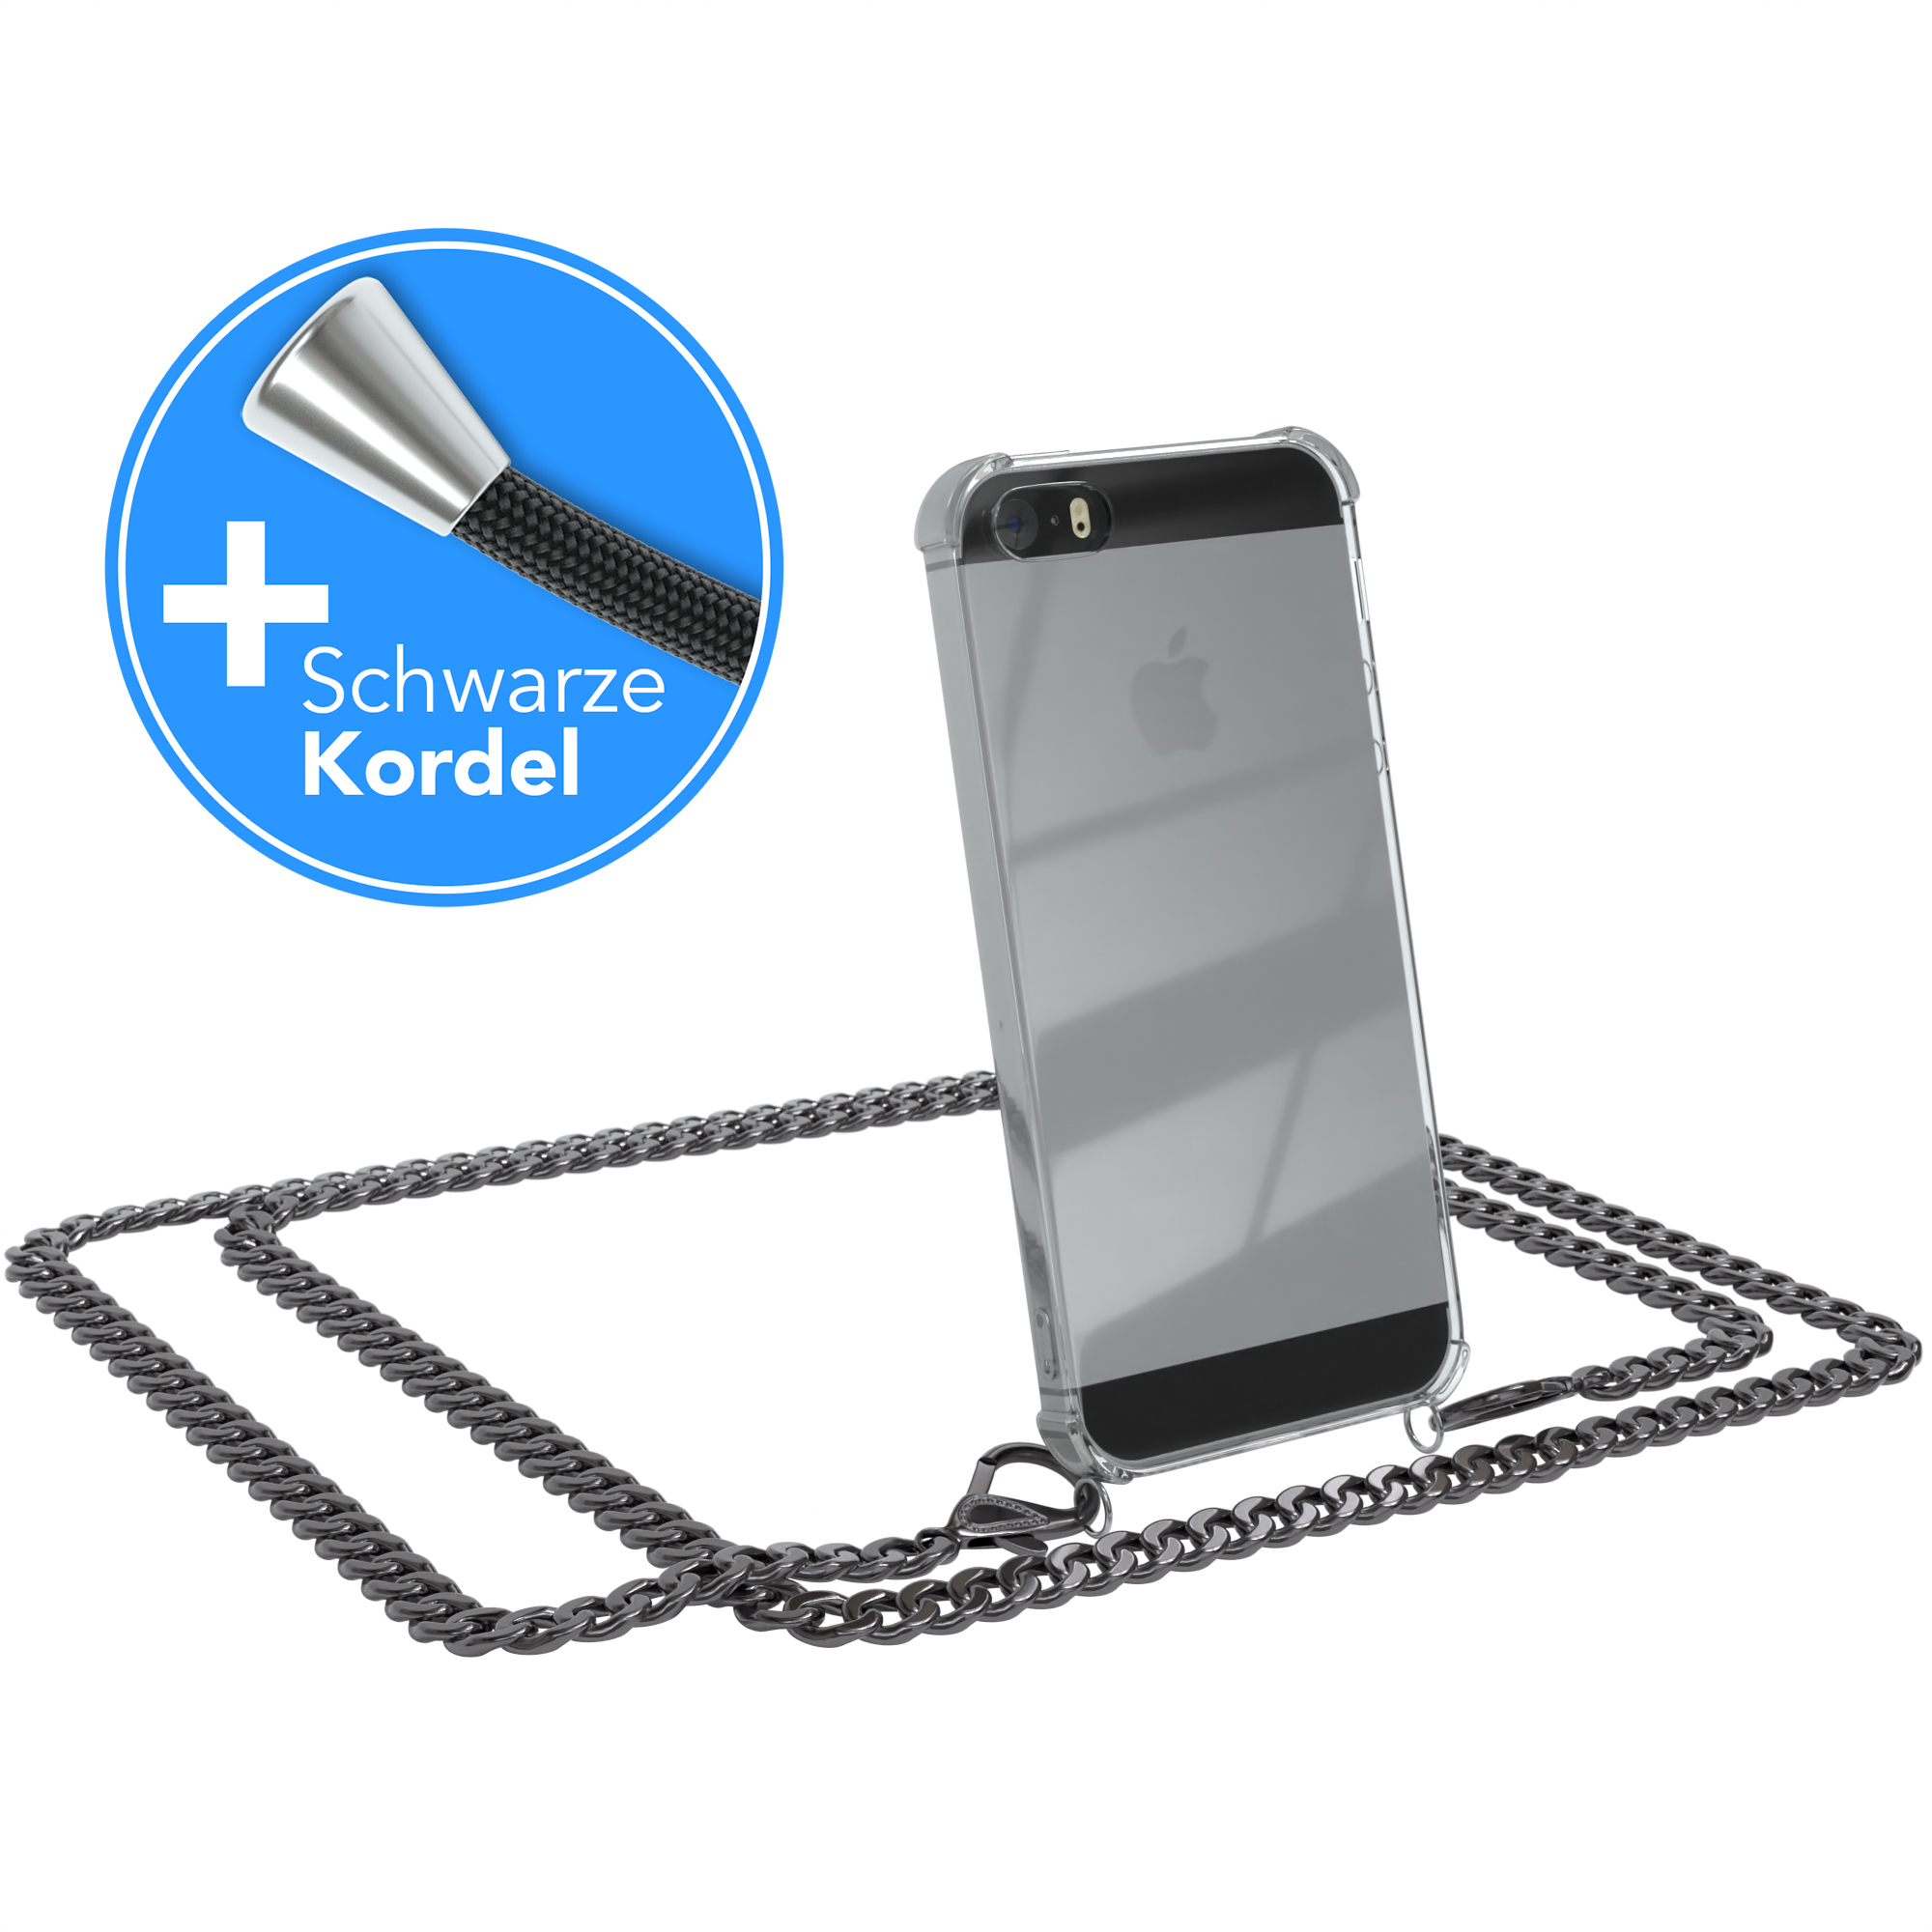 5 Anthrazit Kordel iPhone SE Umhängetasche, Metall 2016, extra 5S, CASE Handykette Schwarz, iPhone Grau + Apple, EAZY /